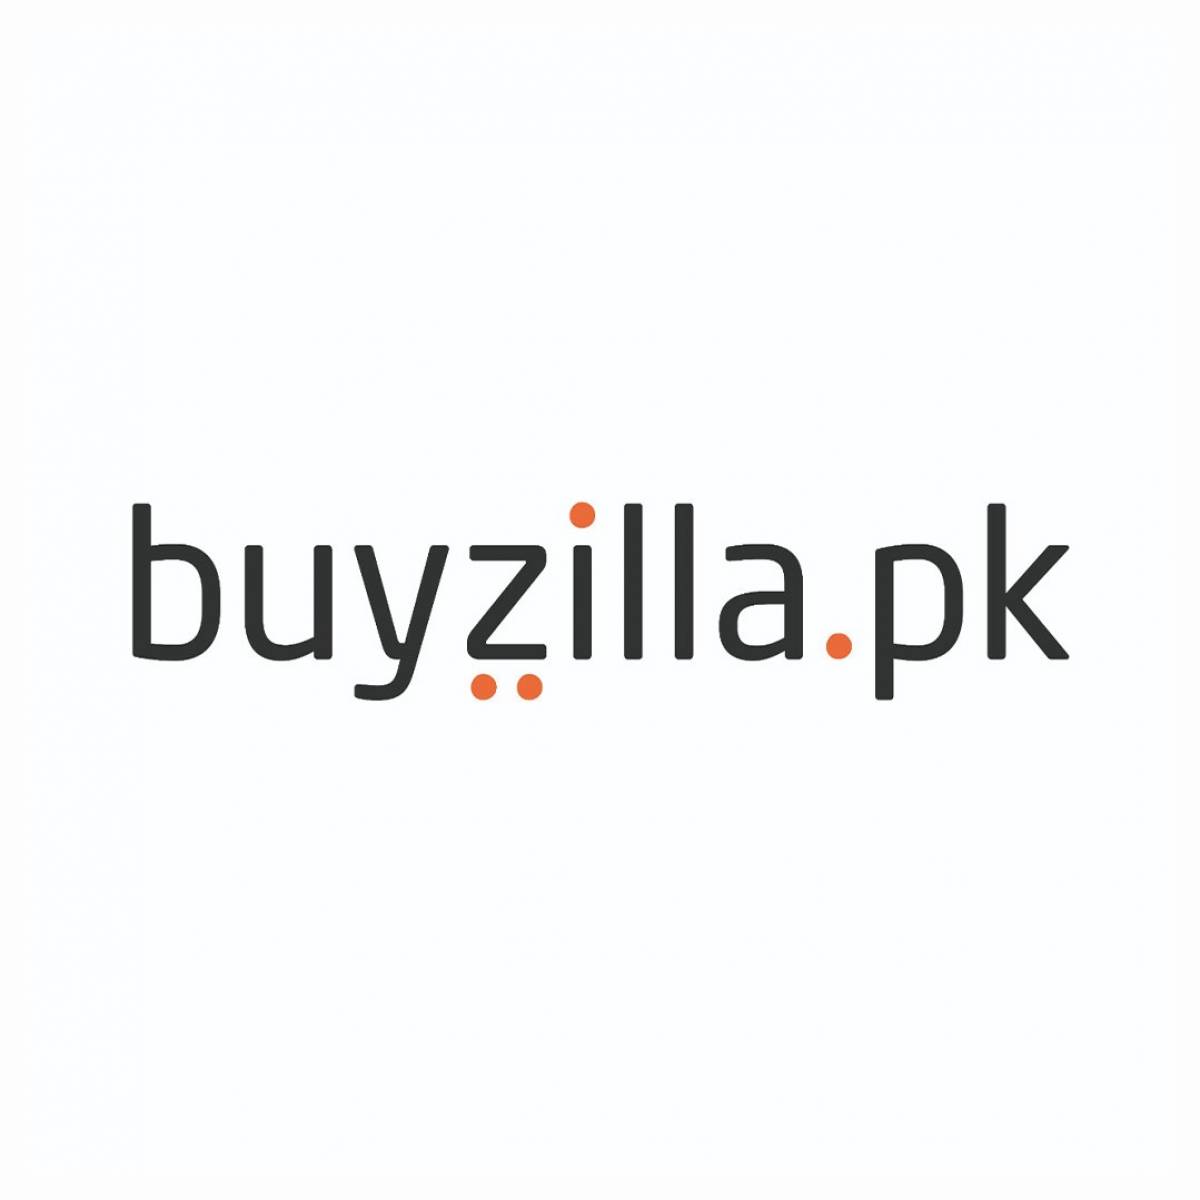 Buyzilla